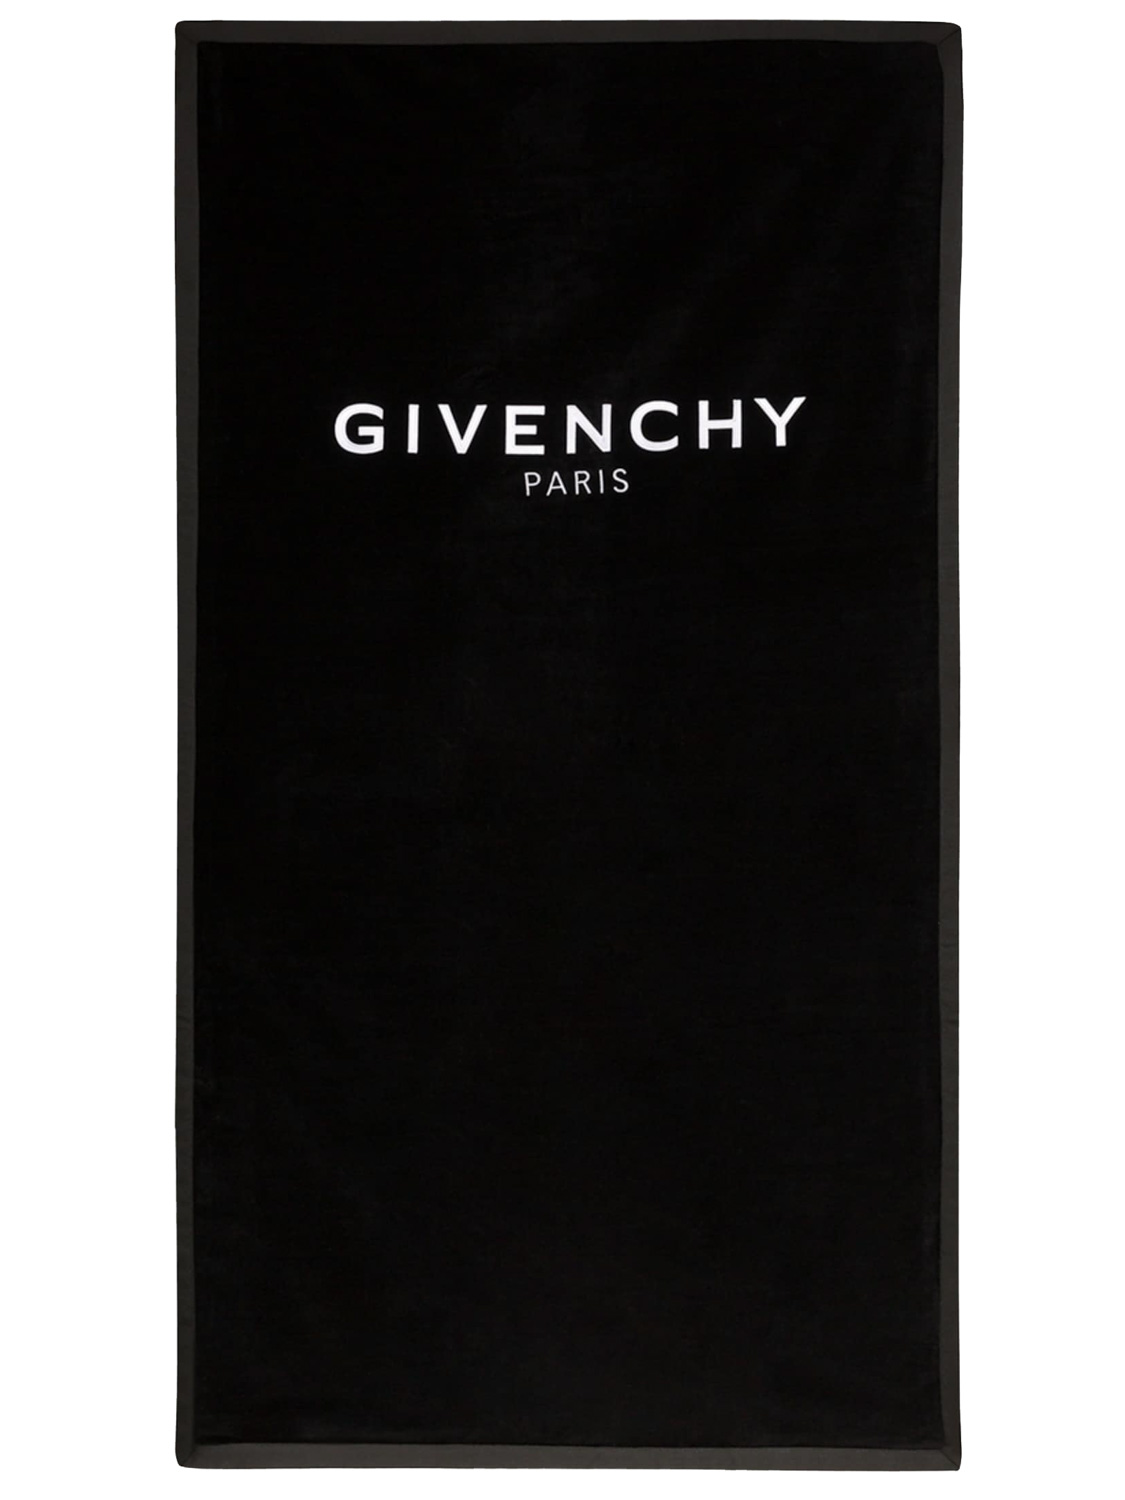 Givenchy Towel | Credomen